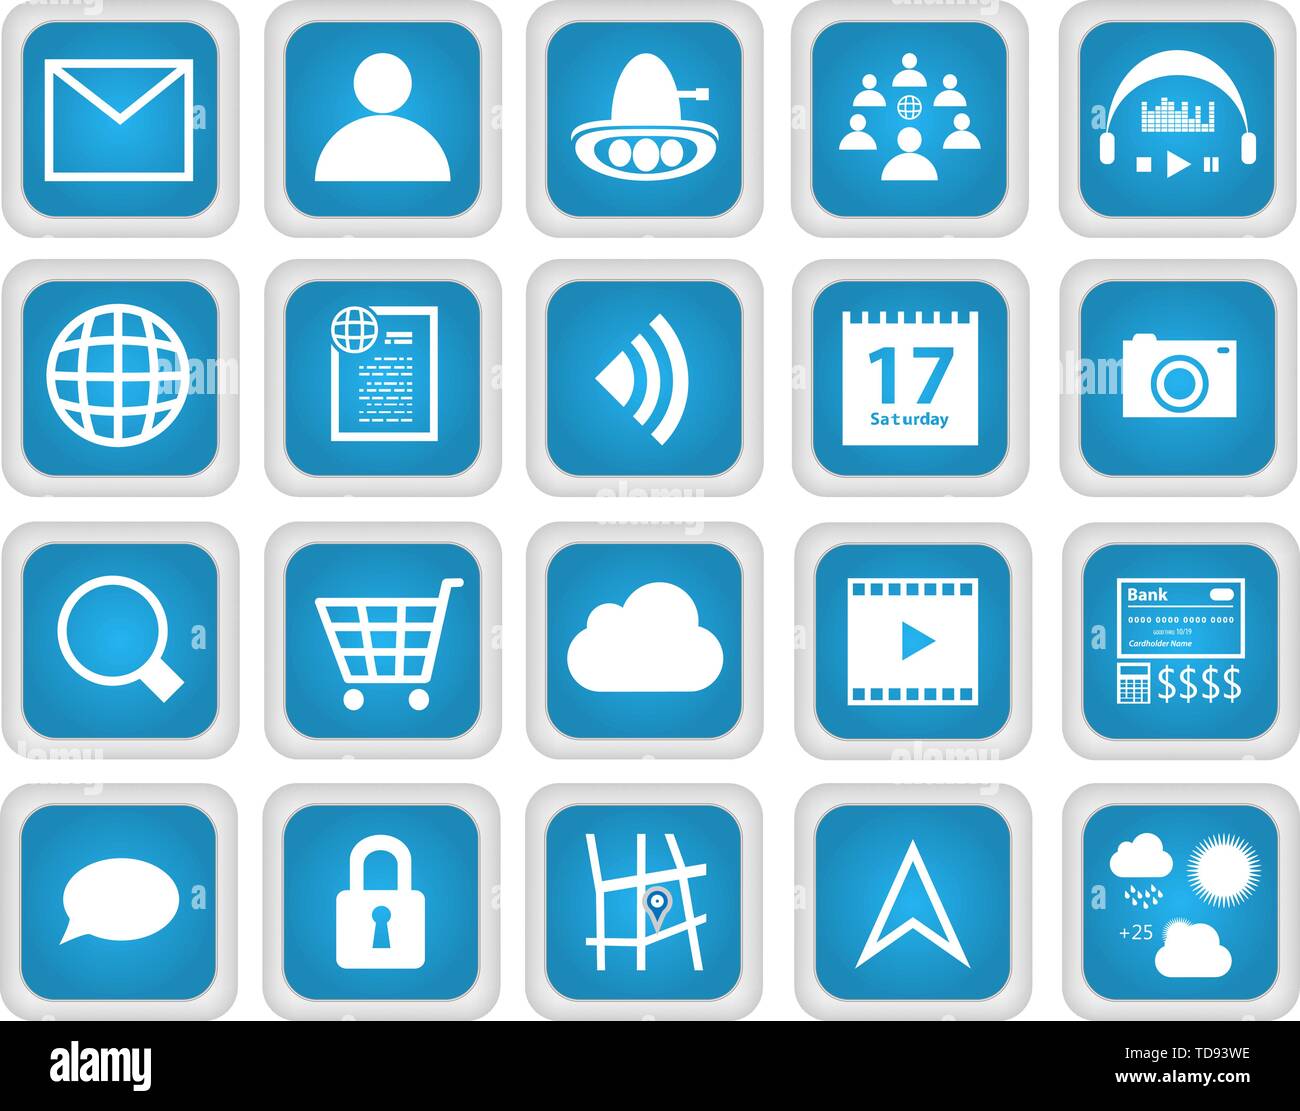 Mobile Web Services Icon Set. 20 EPS 8 Vector Icons in blau Art  Stock-Vektorgrafik - Alamy